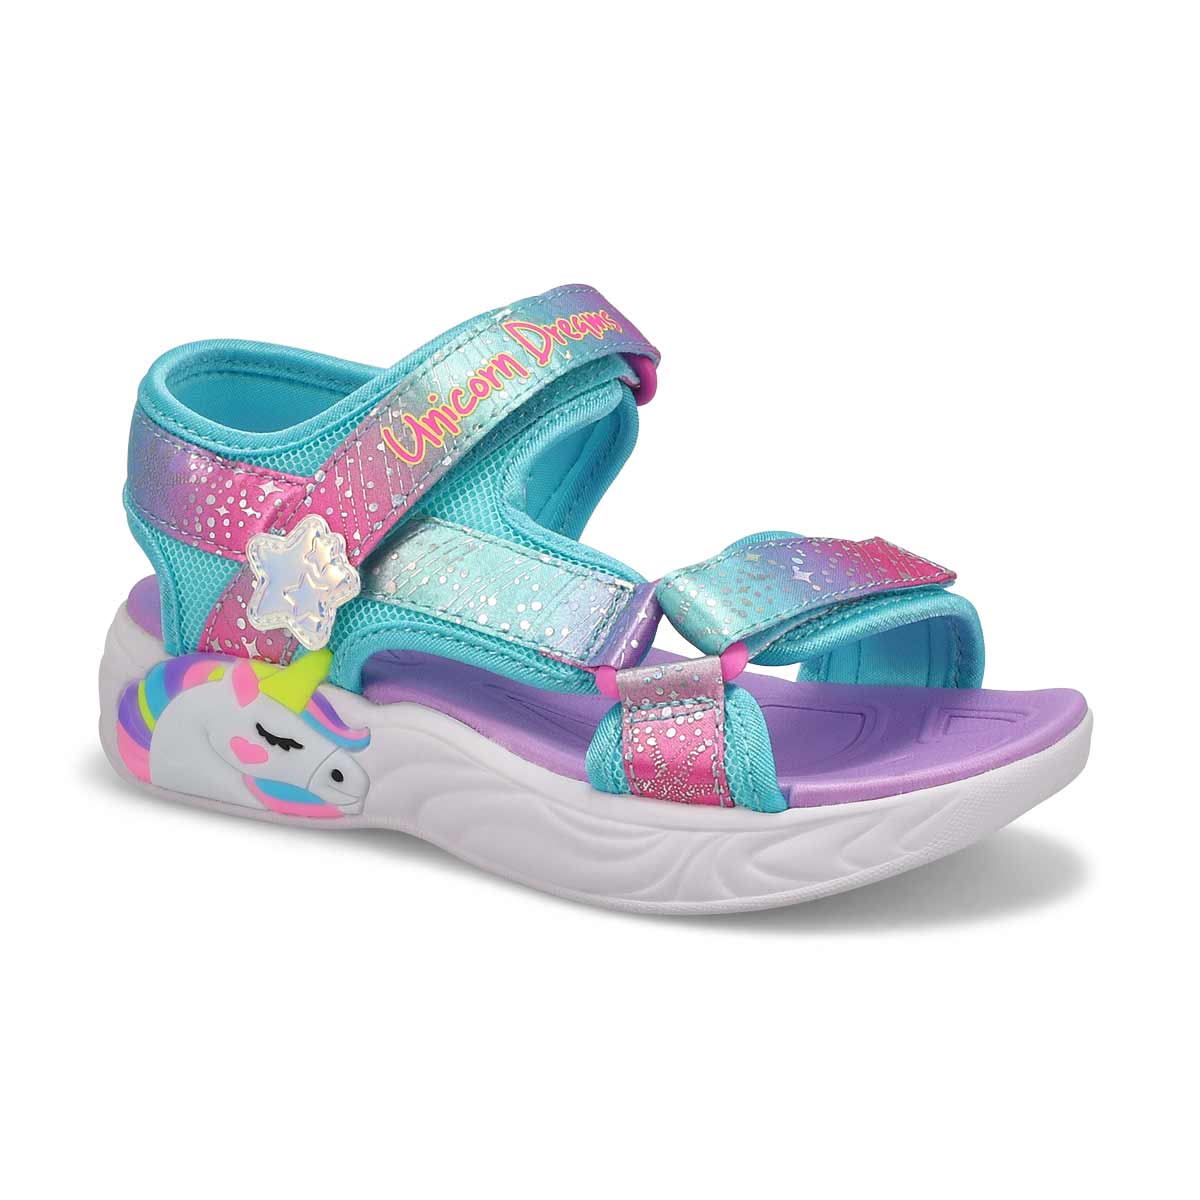 Girl's Unicorn Dreams Sandal - Print Multi